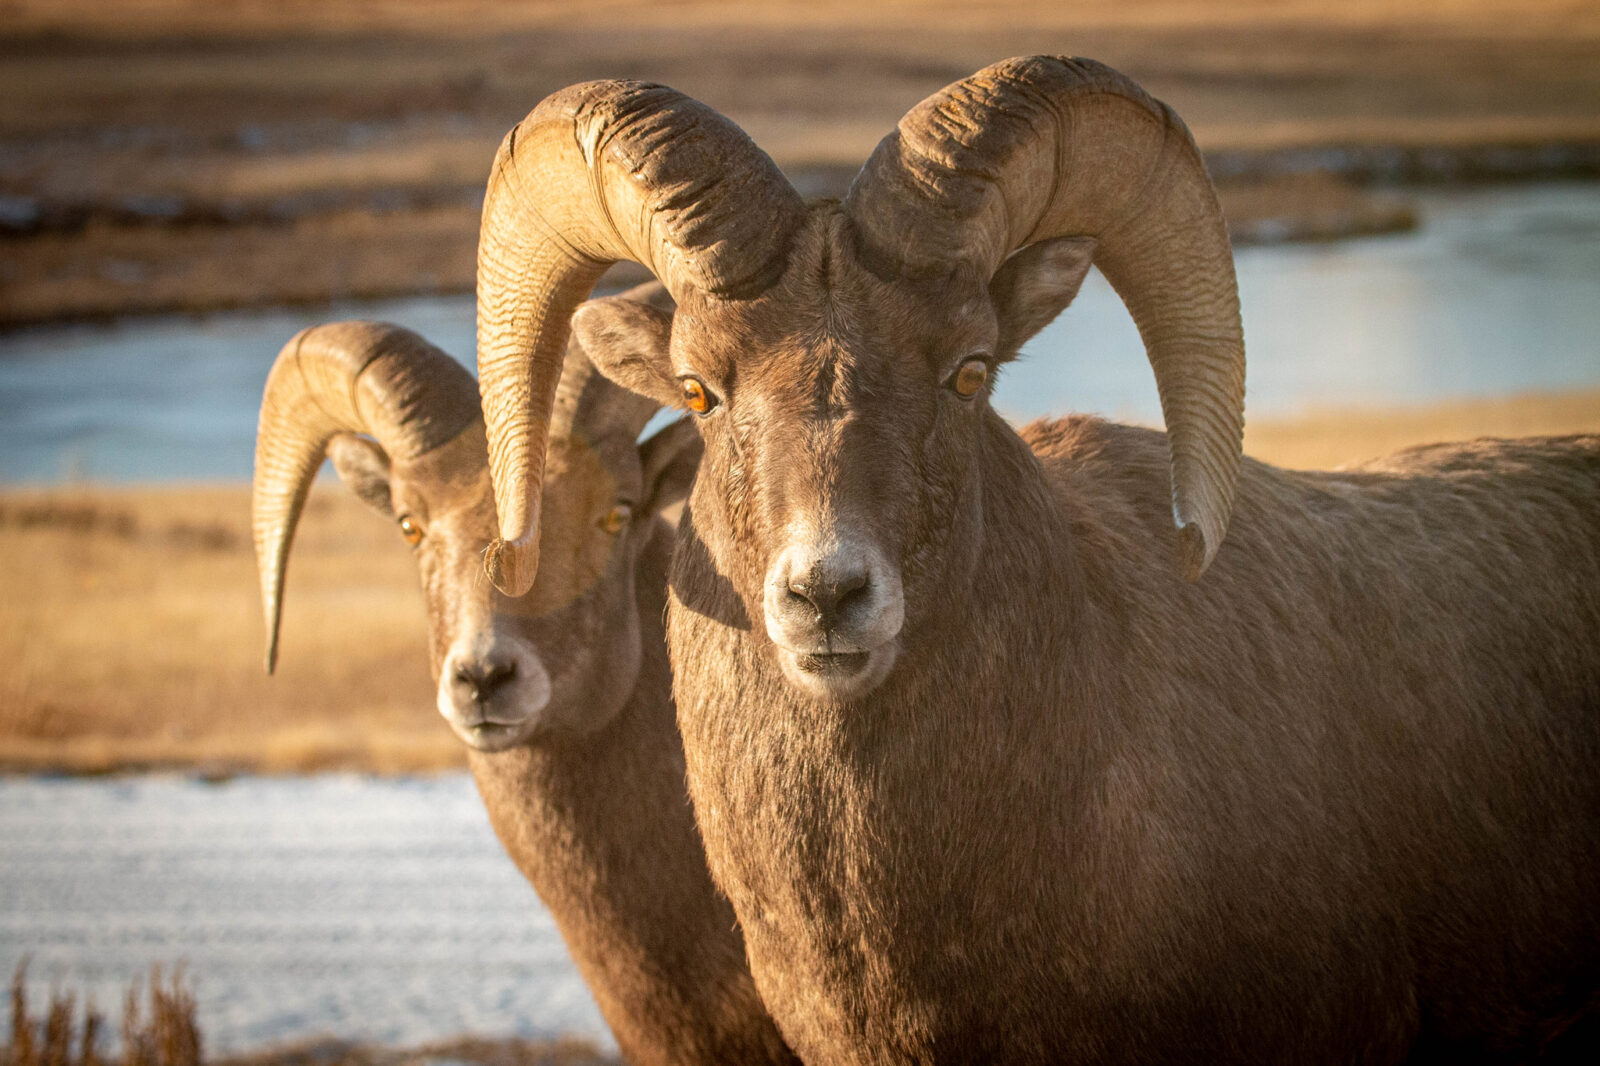 The bighorn sheep mating season is underway.